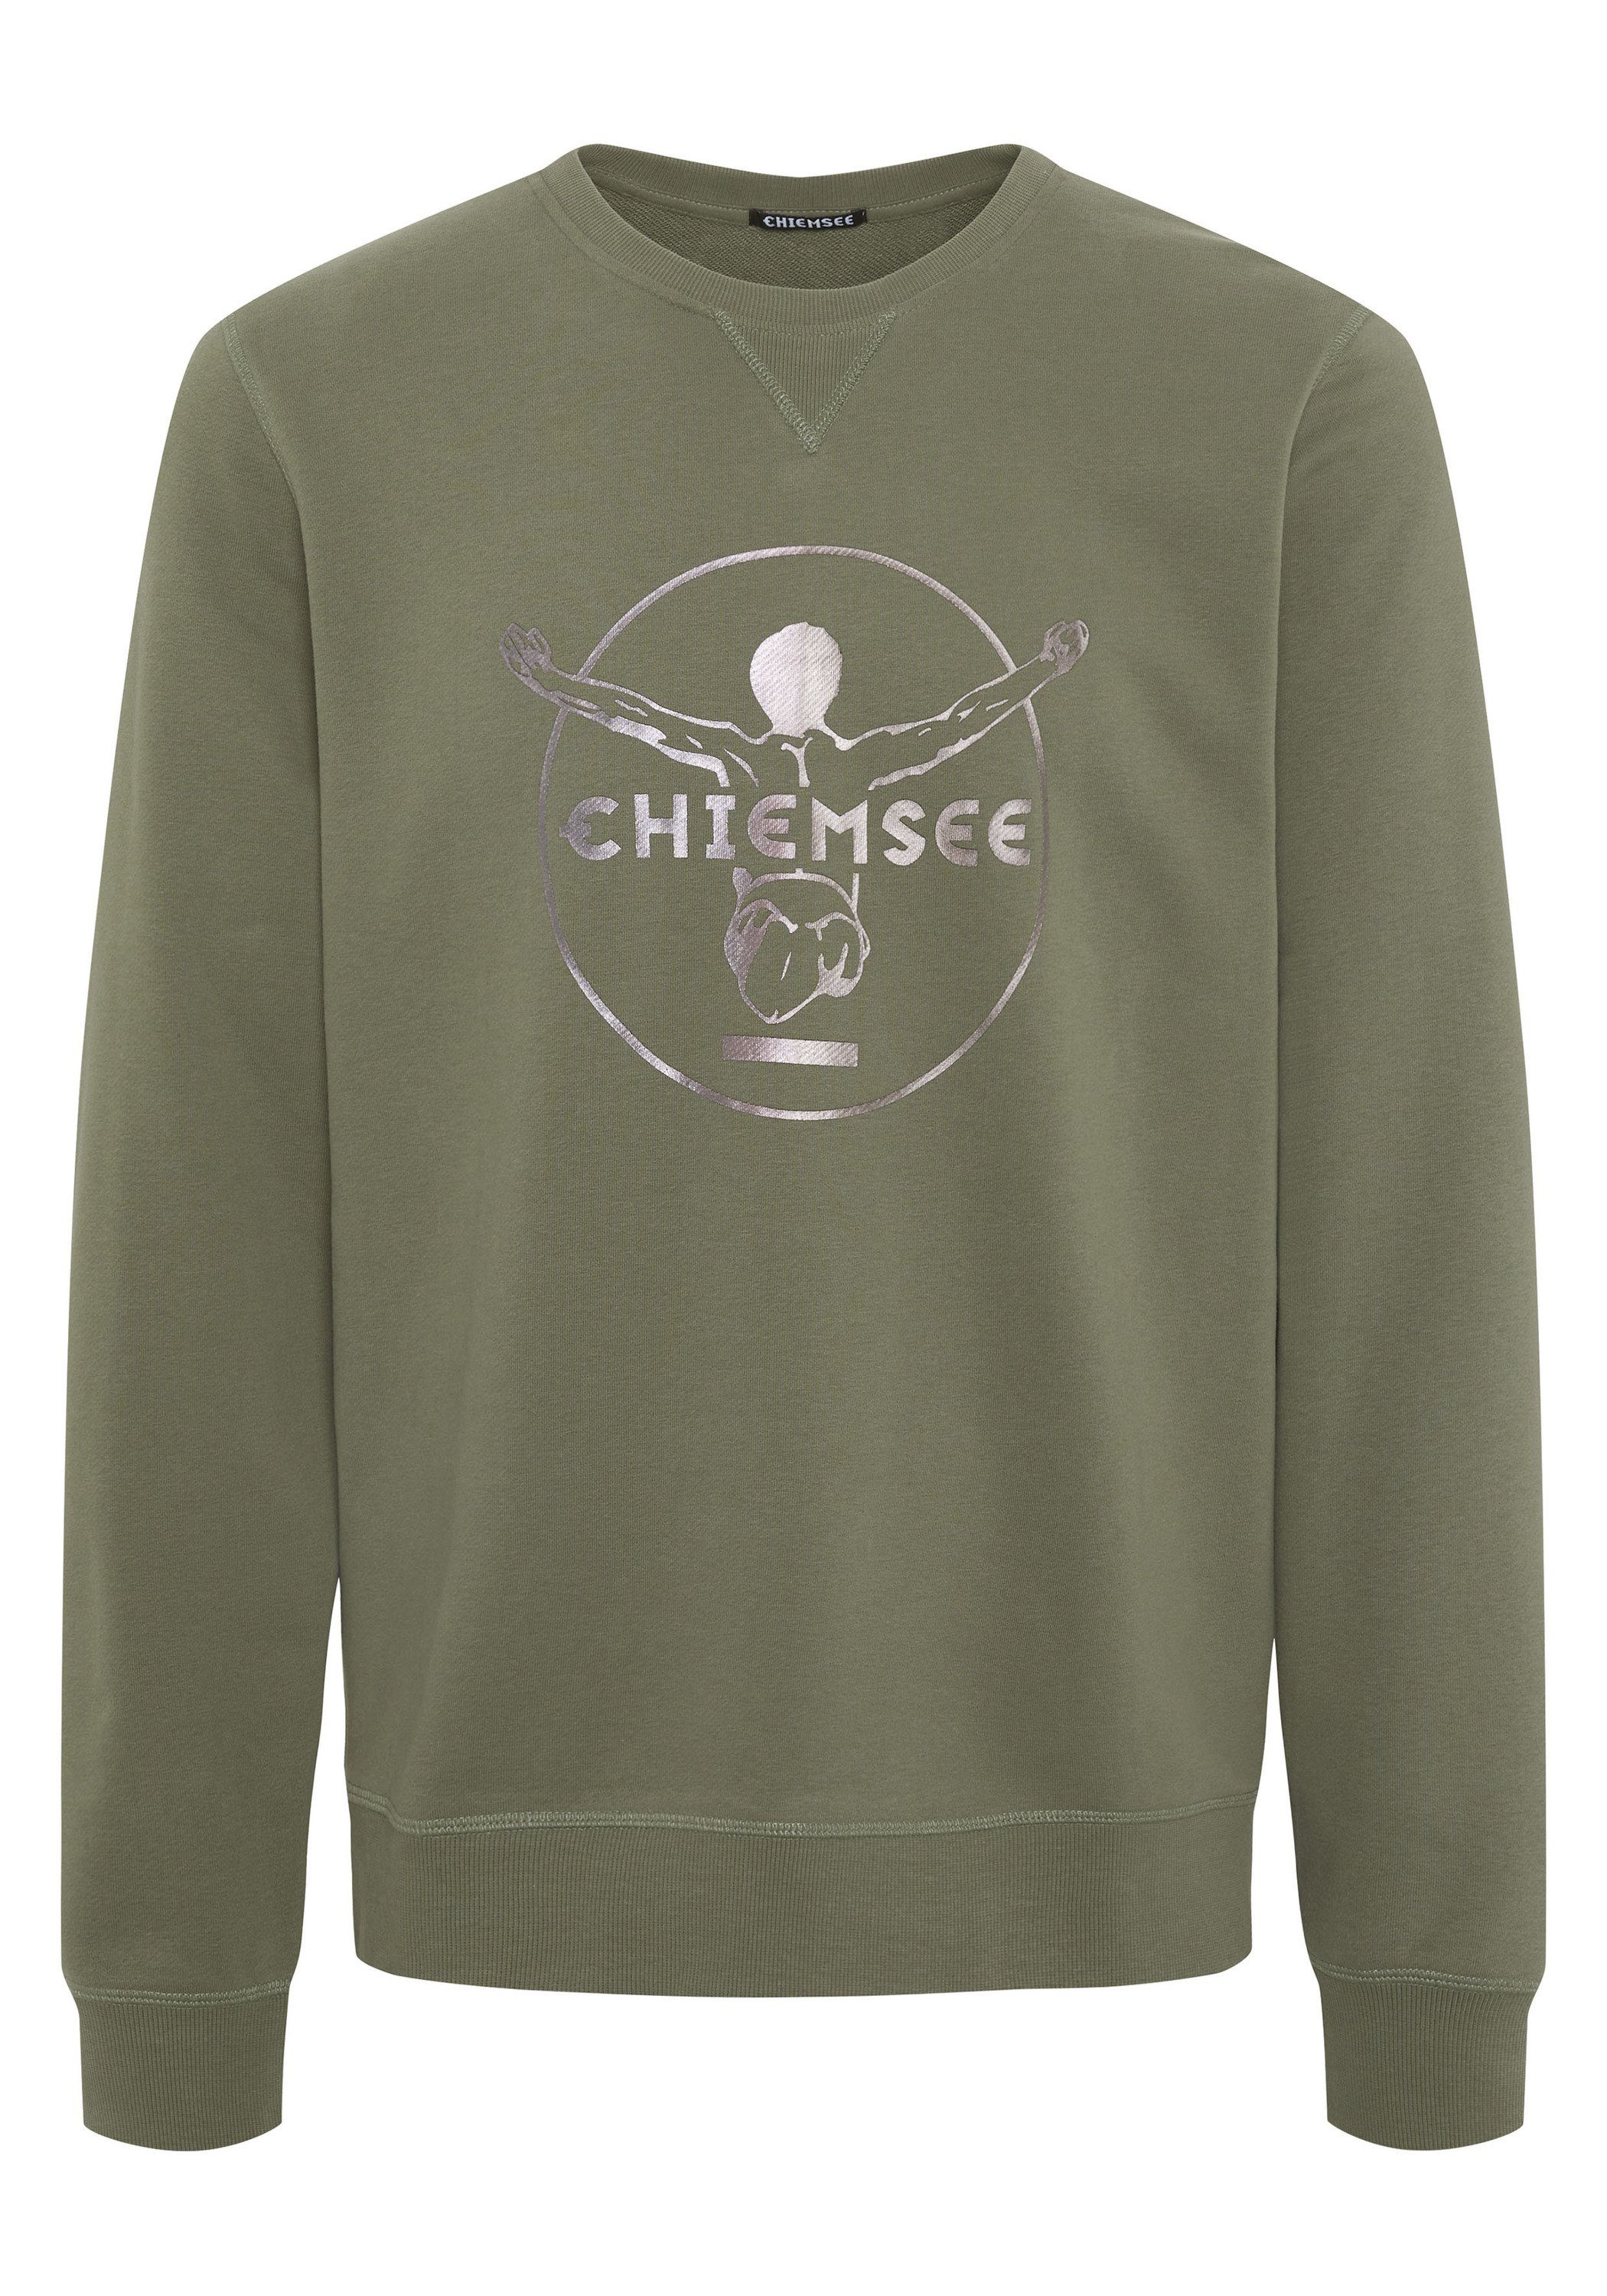 Chiemsee Sweatshirt Sweater im Label-Look 1 18-0515 Dusty Olive